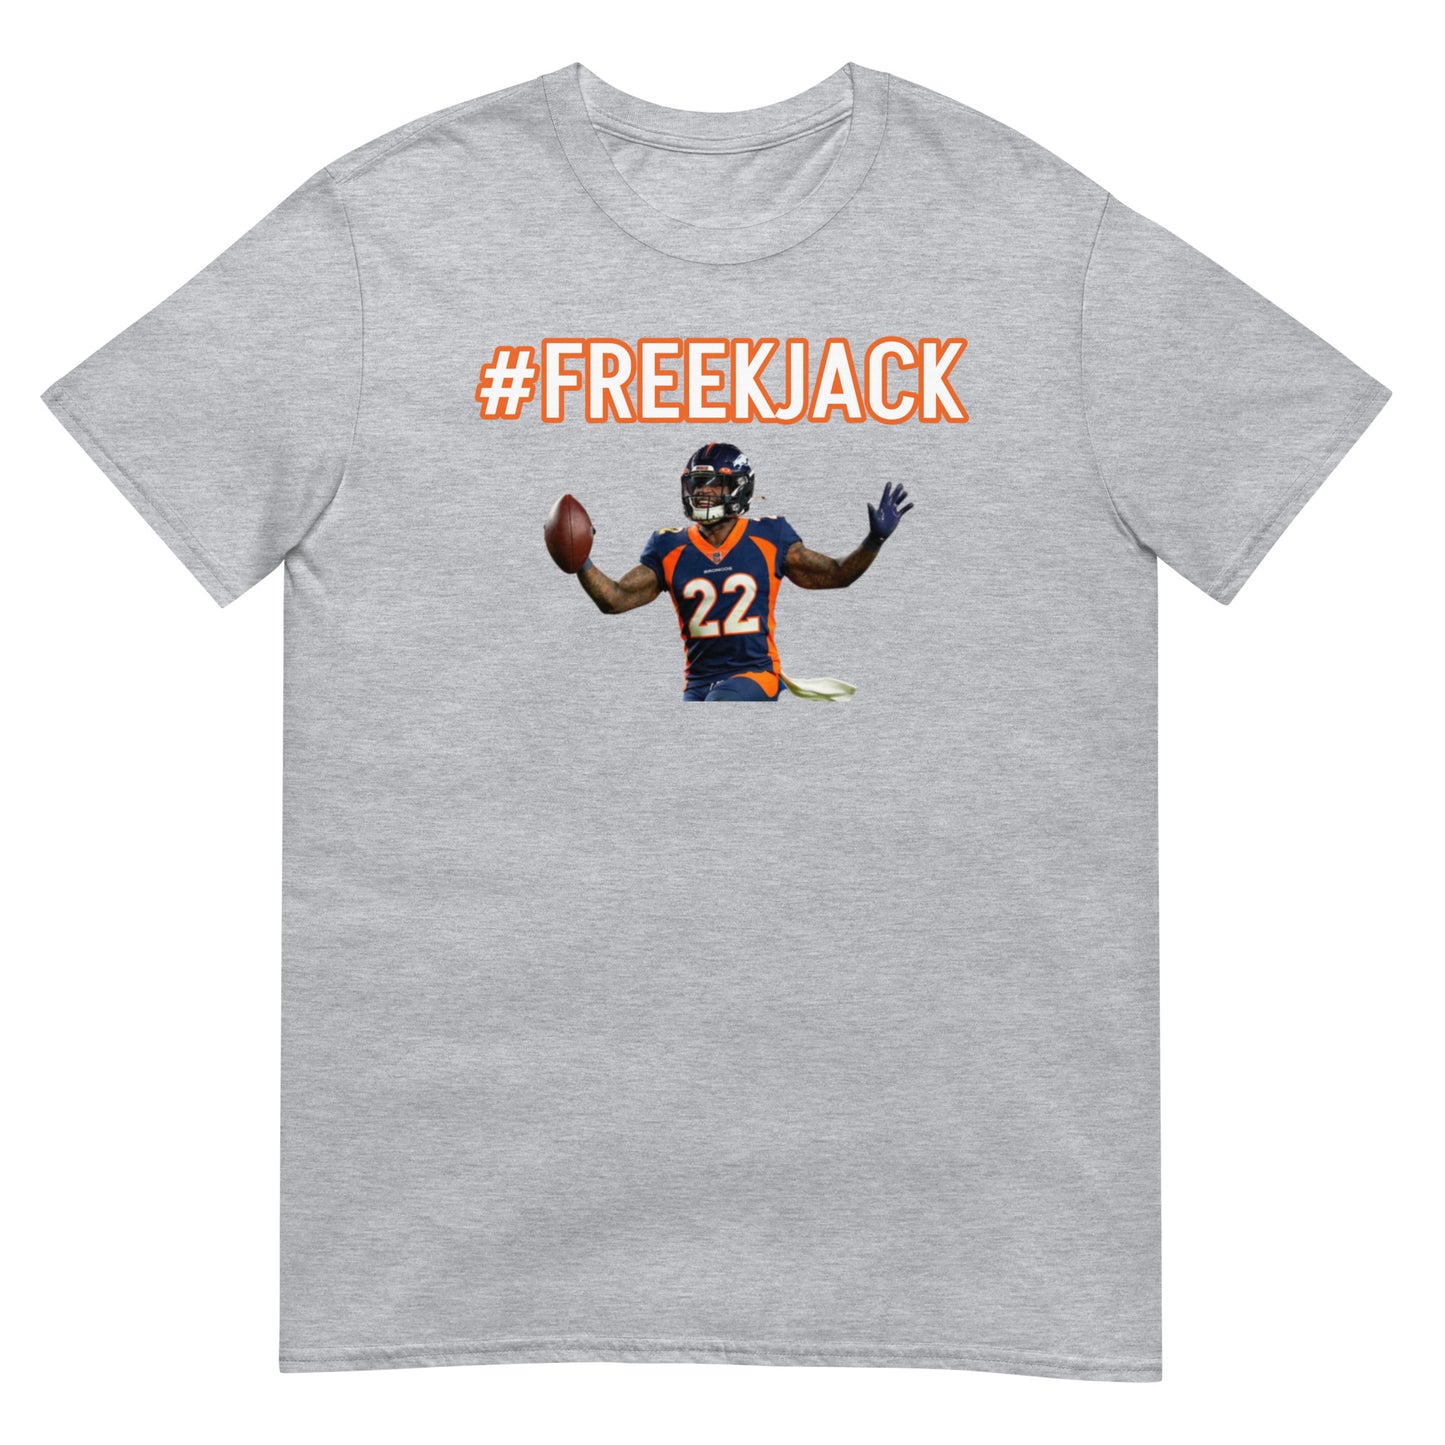 FREE K JACK!